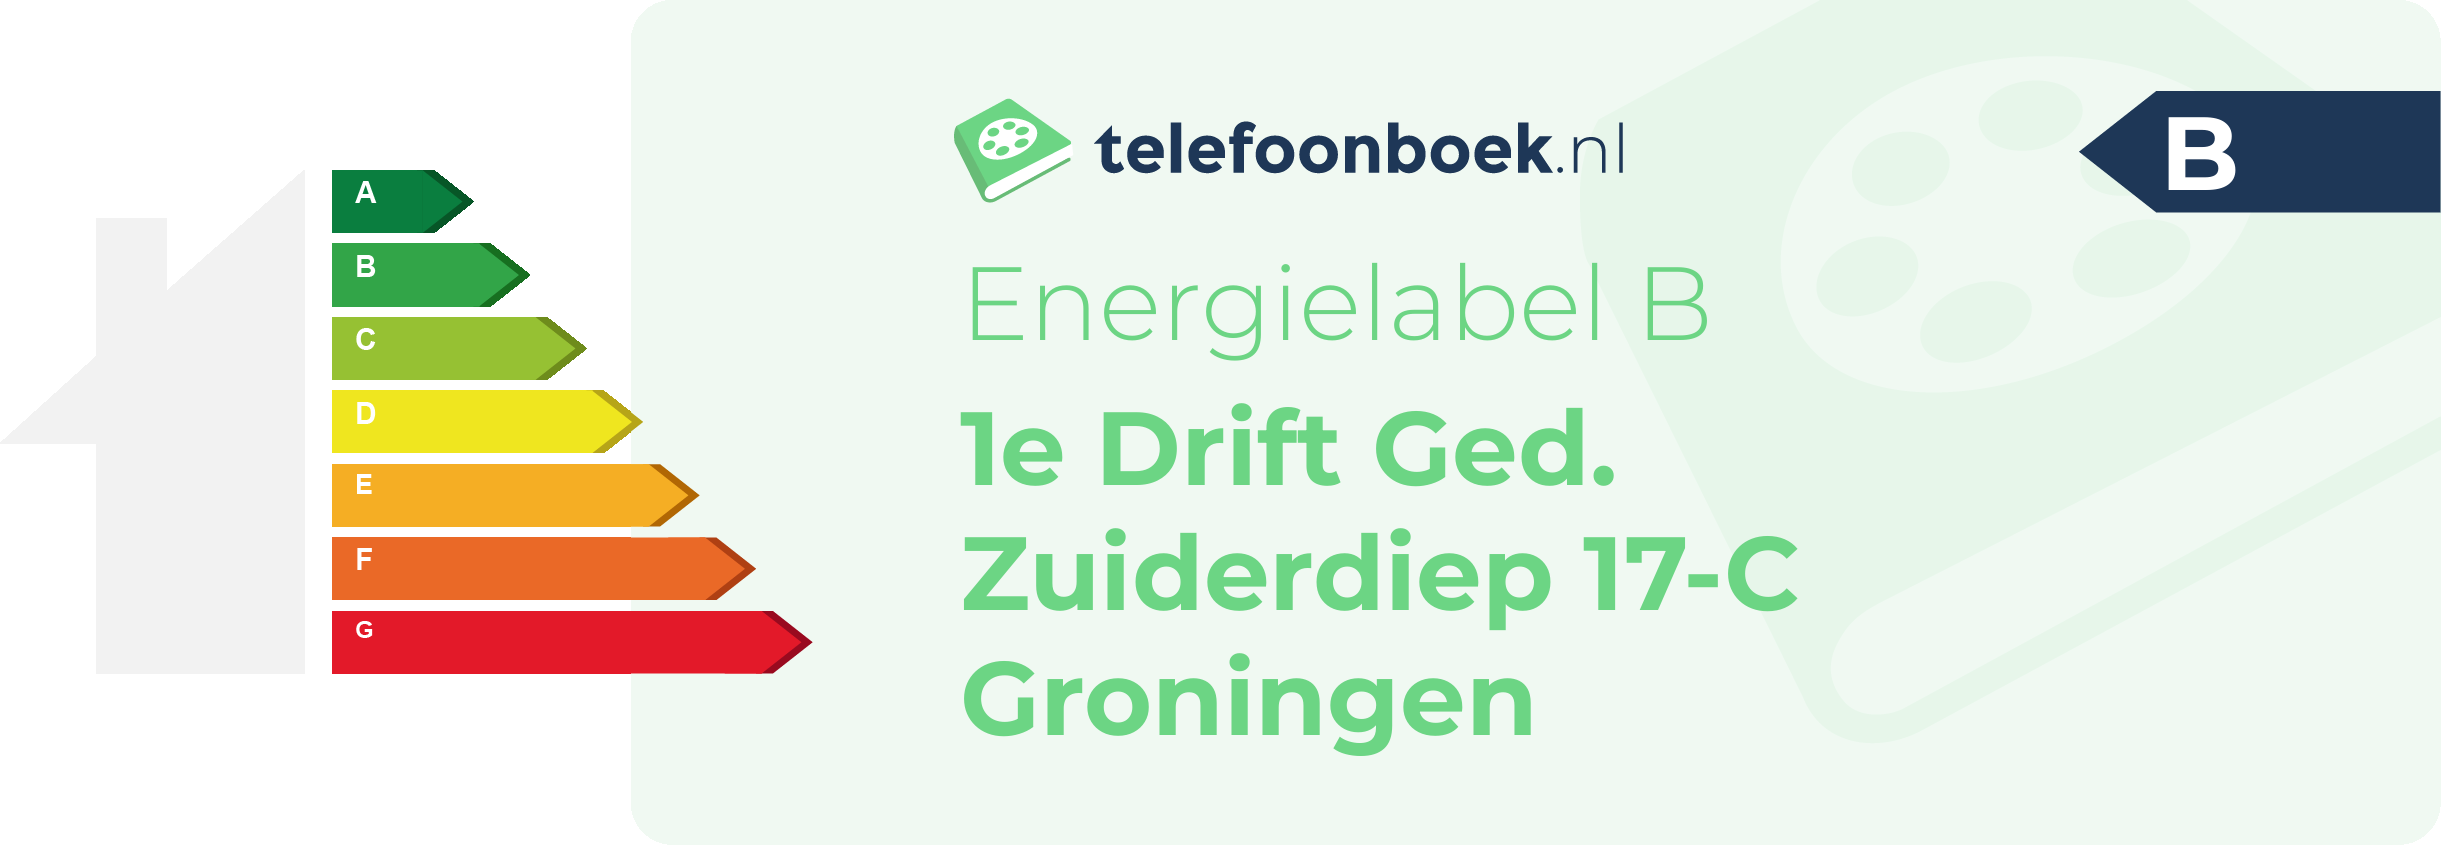 Energielabel 1e Drift Ged. Zuiderdiep 17-C Groningen